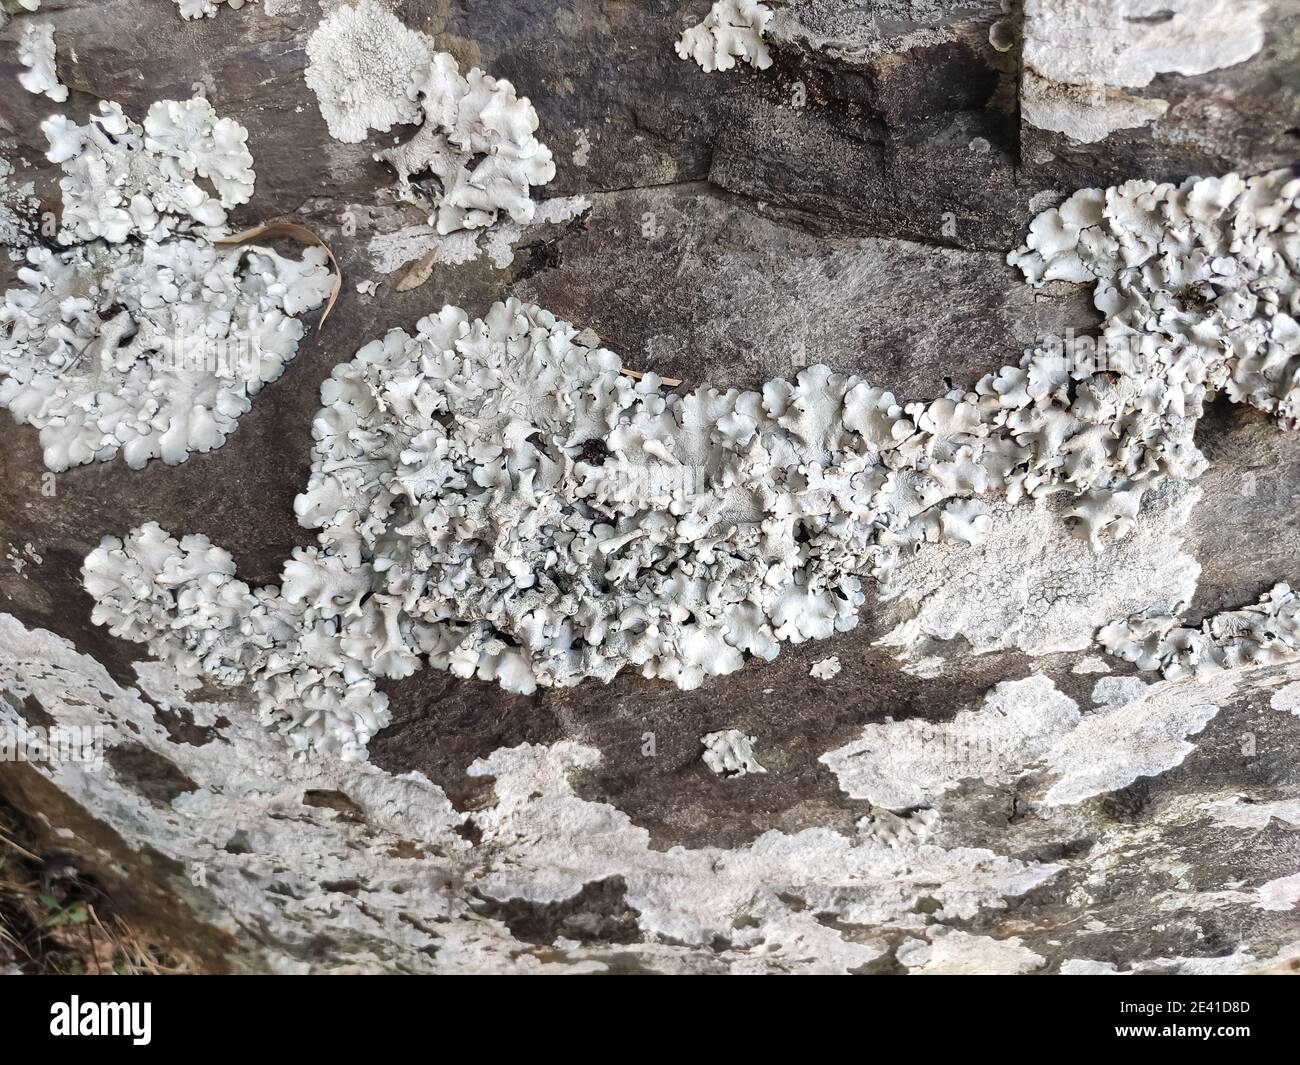 Closeup shot of a beautiful Parmelia sulcata mushroom on the stone surface Stock Photo